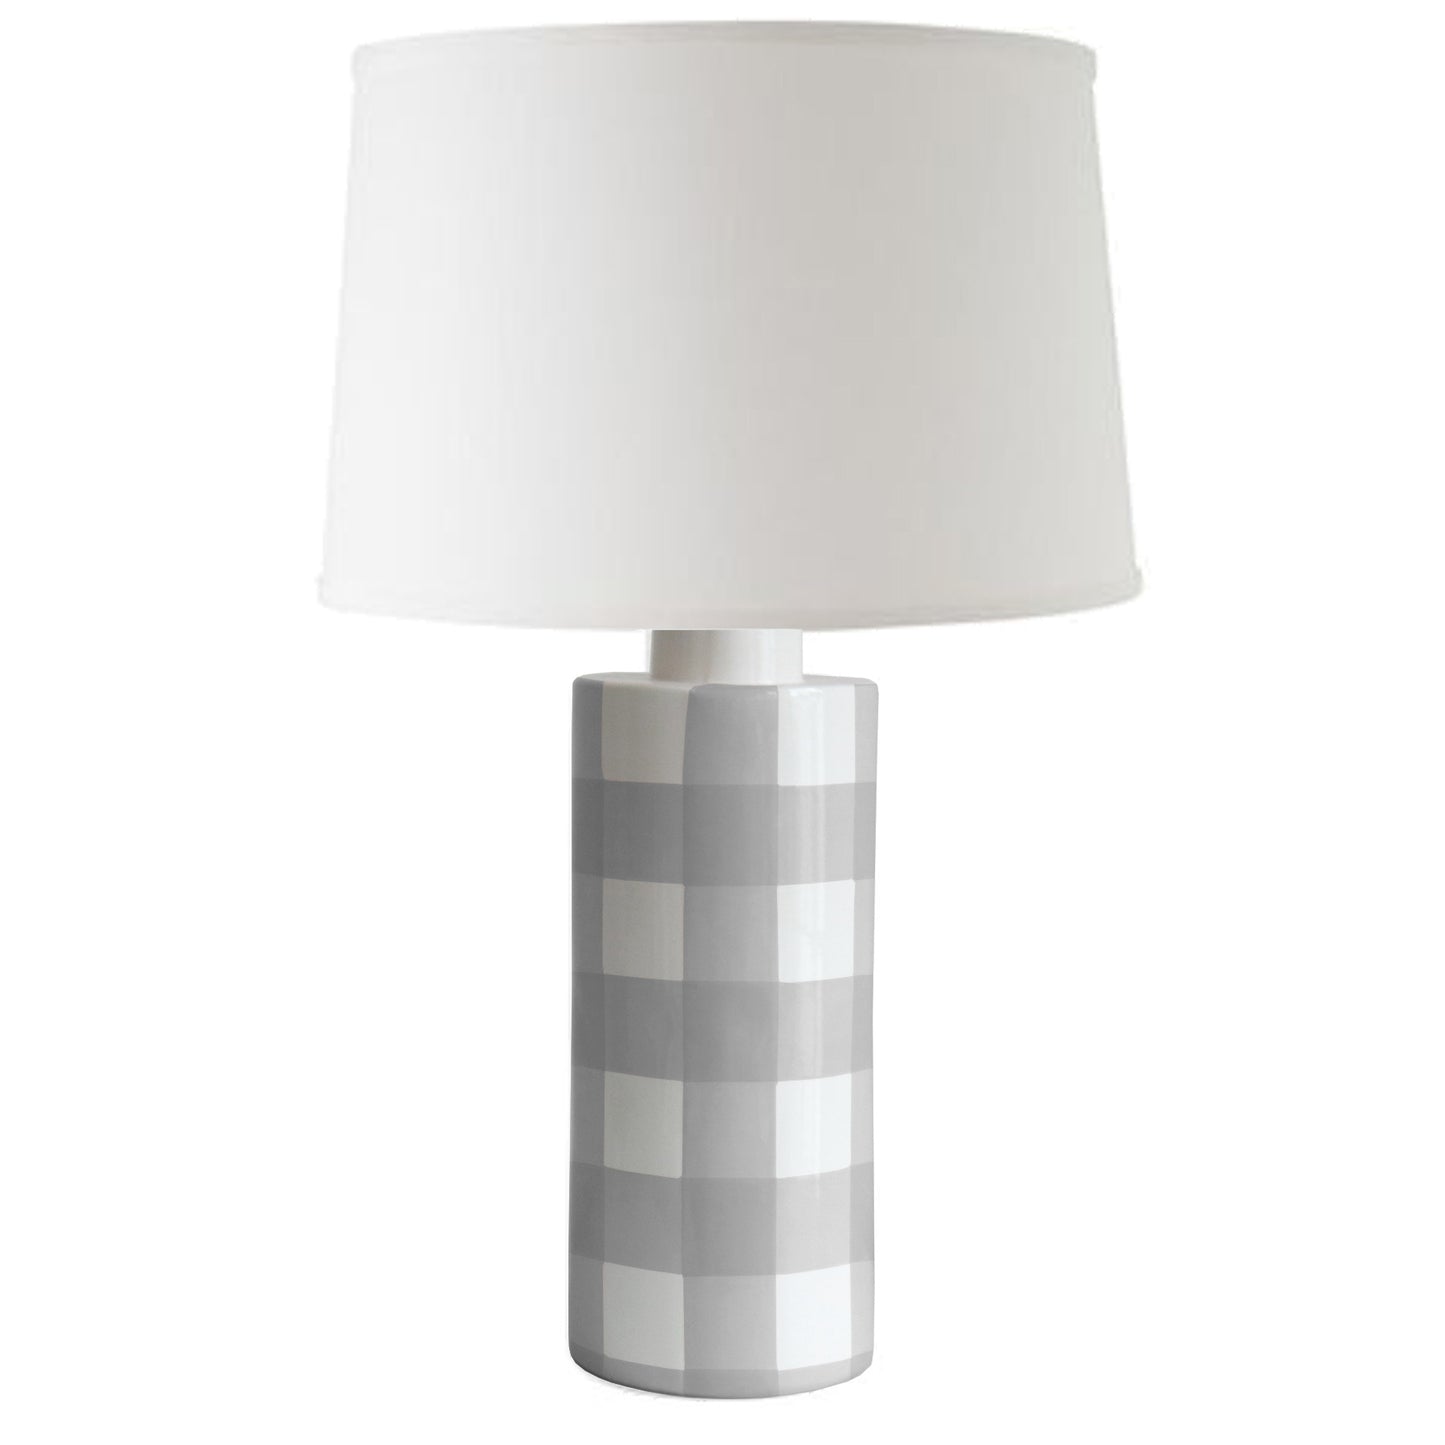 Graphite Gray Gingham Column Lamp